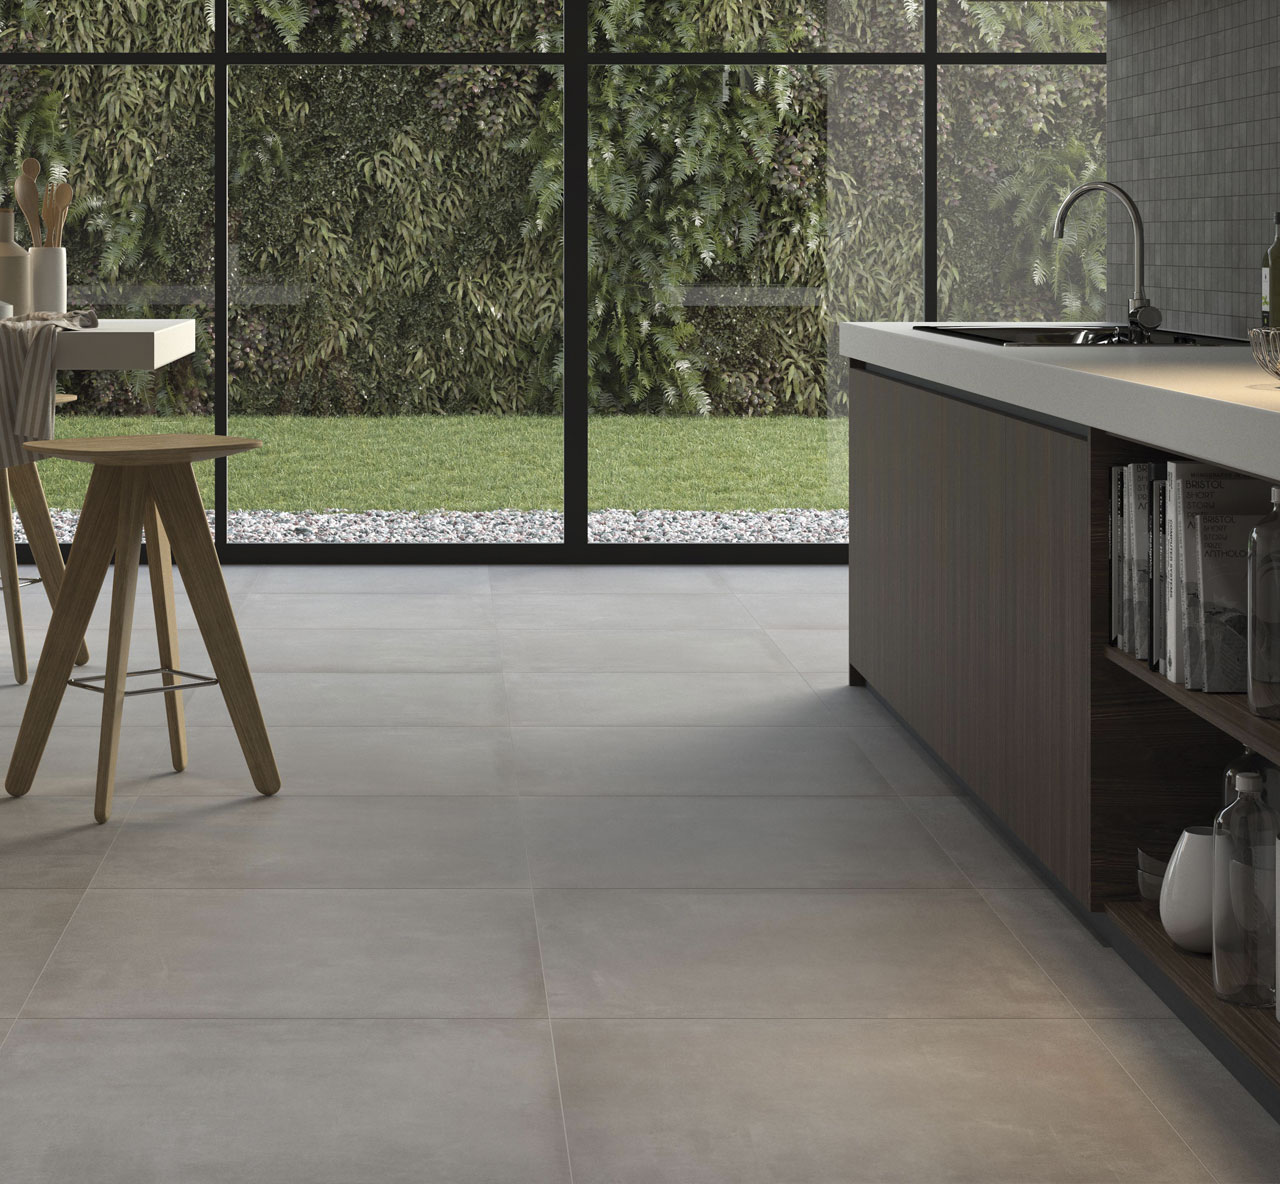 Basic Concrete Matt Grey Concrete Effect Tiles used as kitchen floor tiles in a modern open plan kitchen dining area